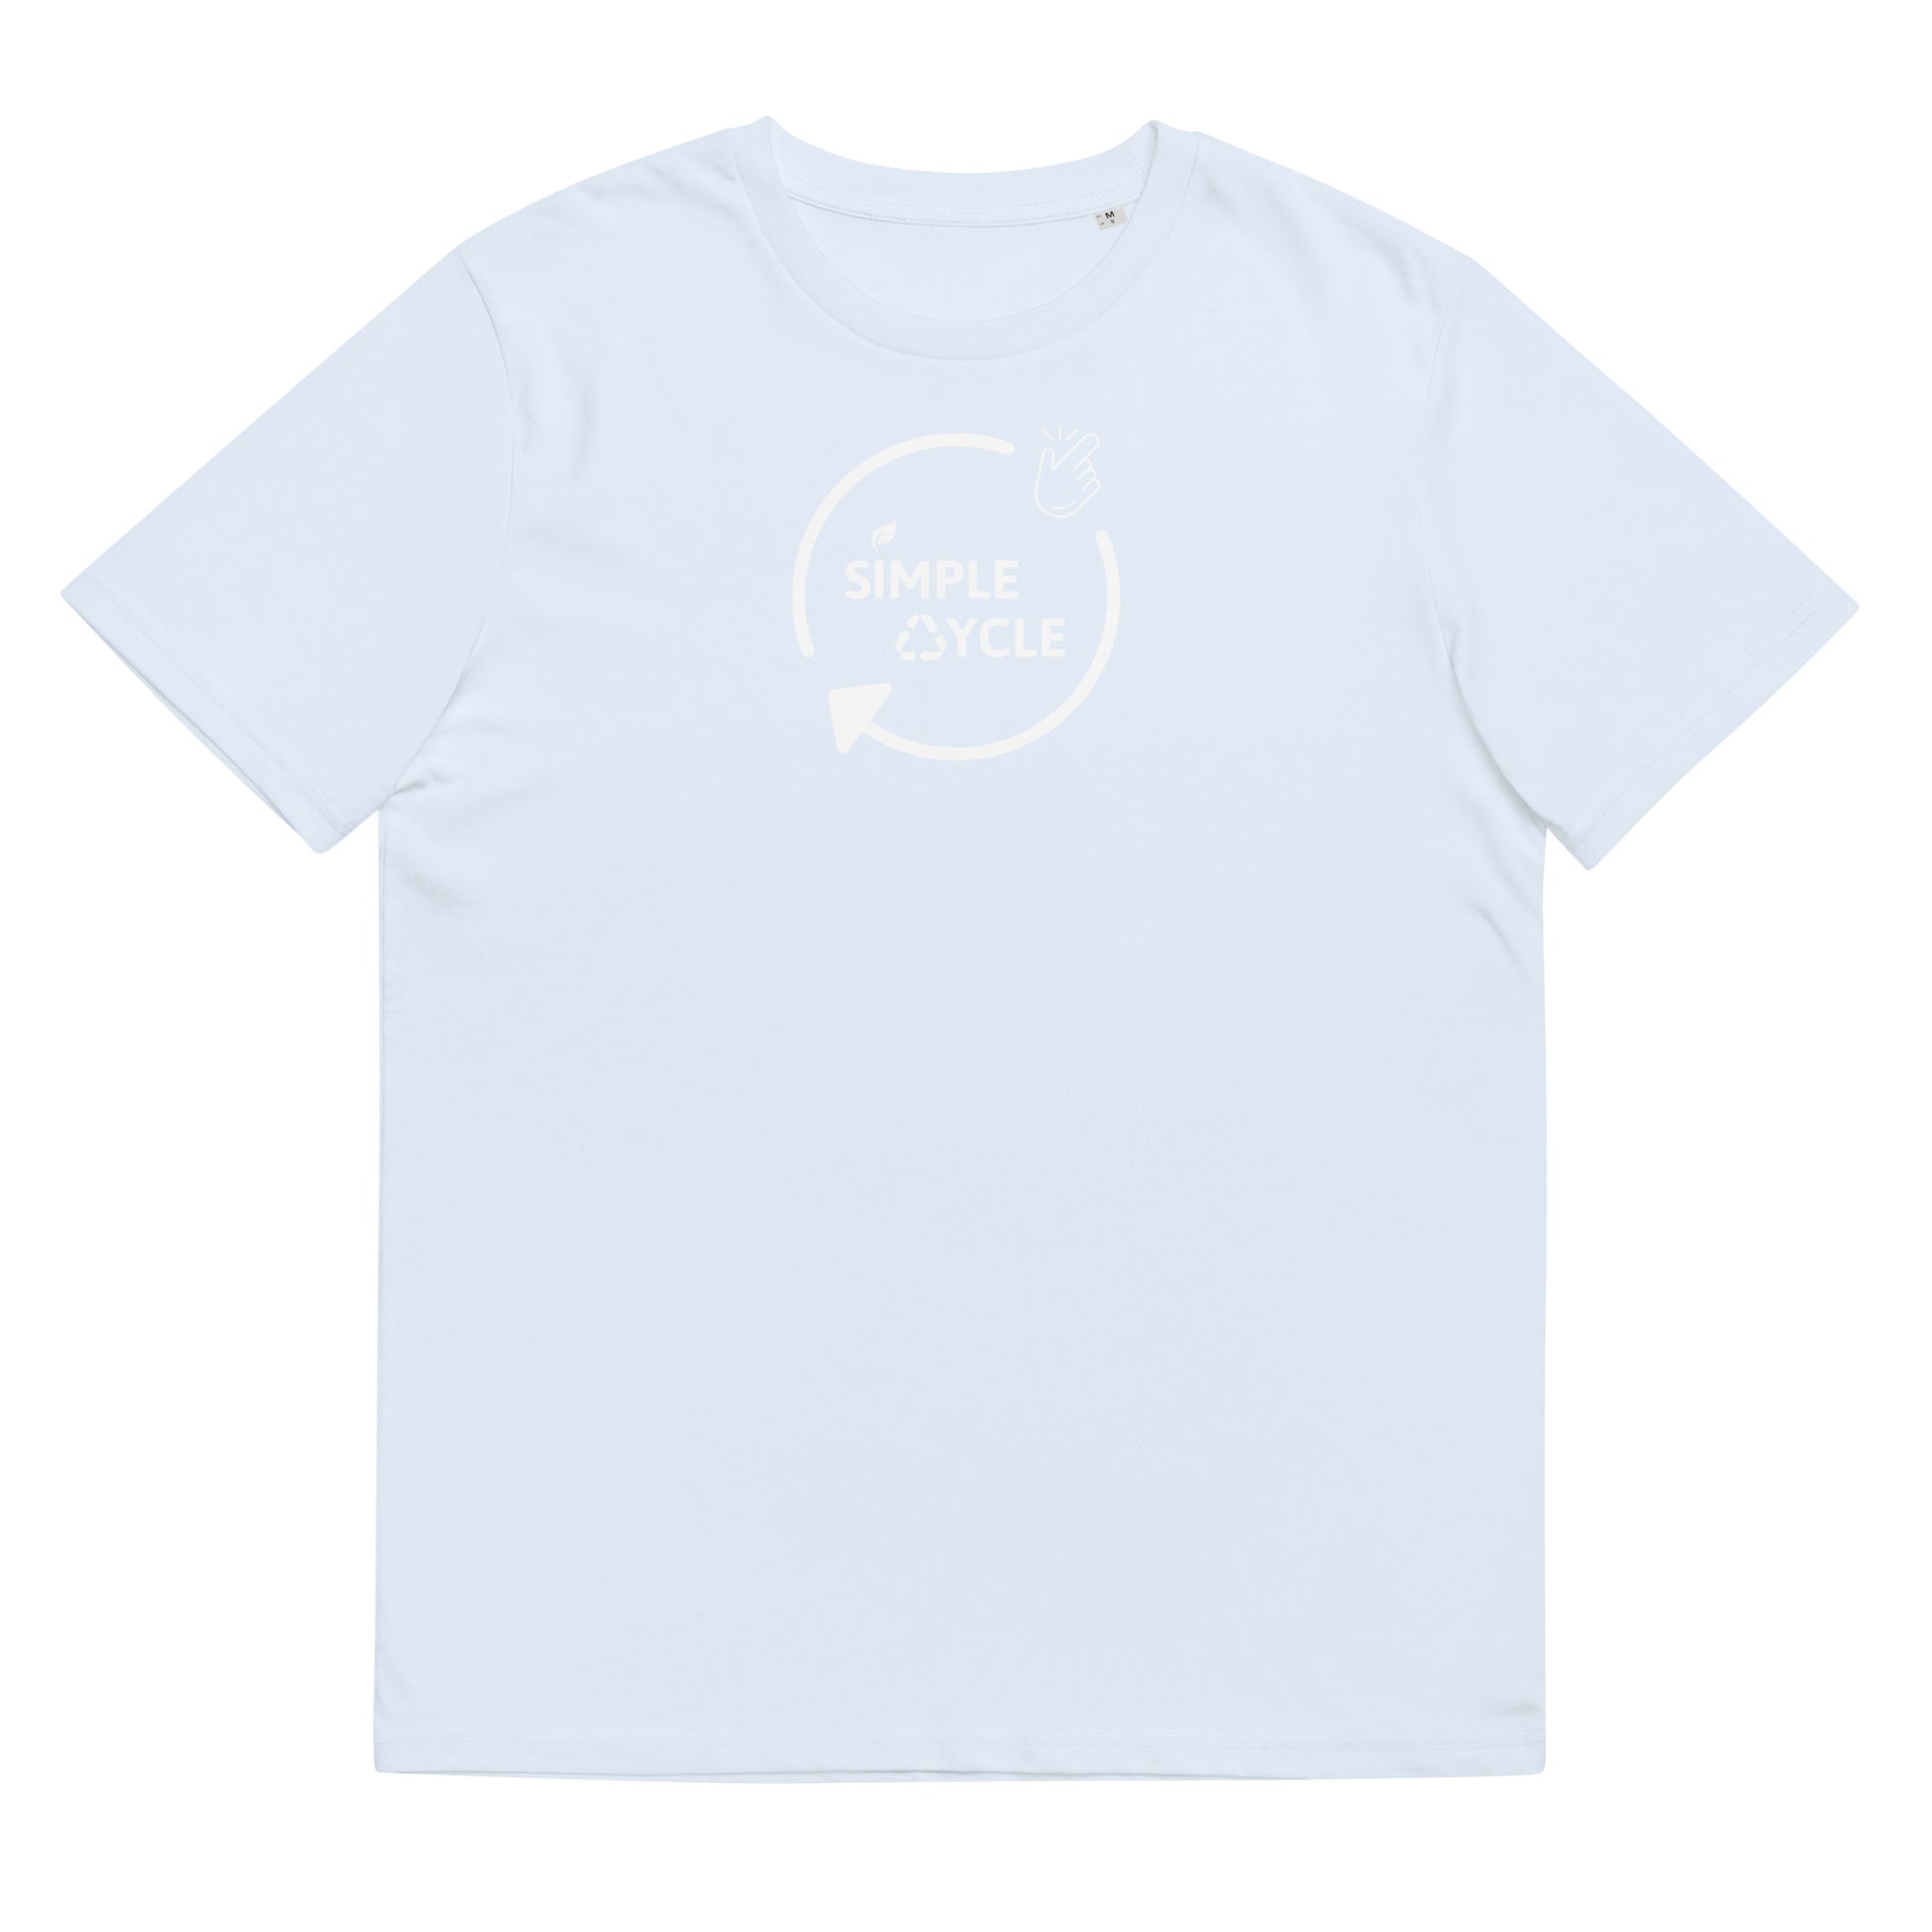 SimpleCycle Unisex Organic Cotton T-Shirt serene blue